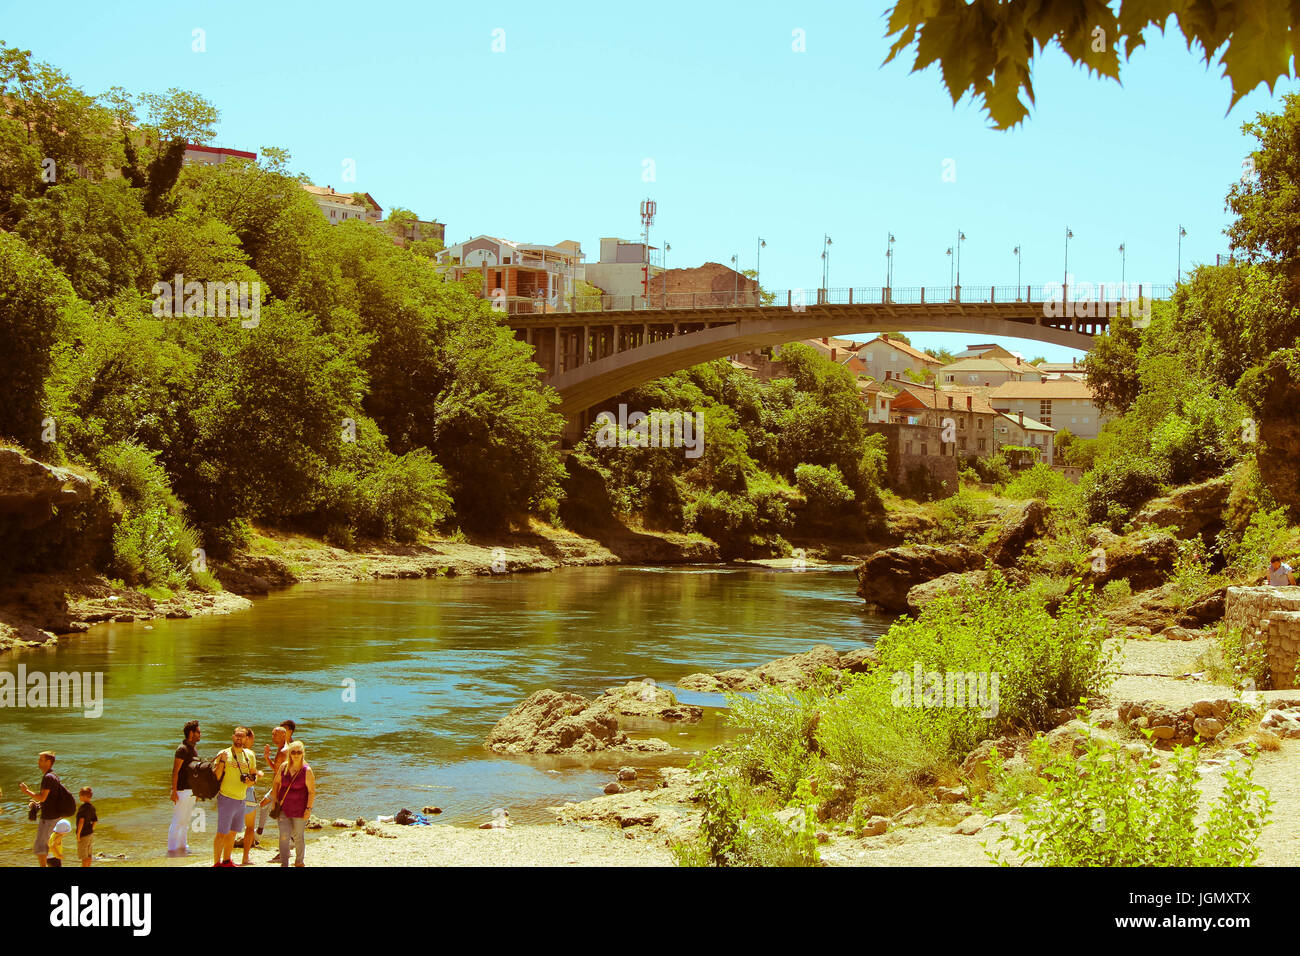 Belle ville de Mostar, Bosnie-Herzégovine Banque D'Images